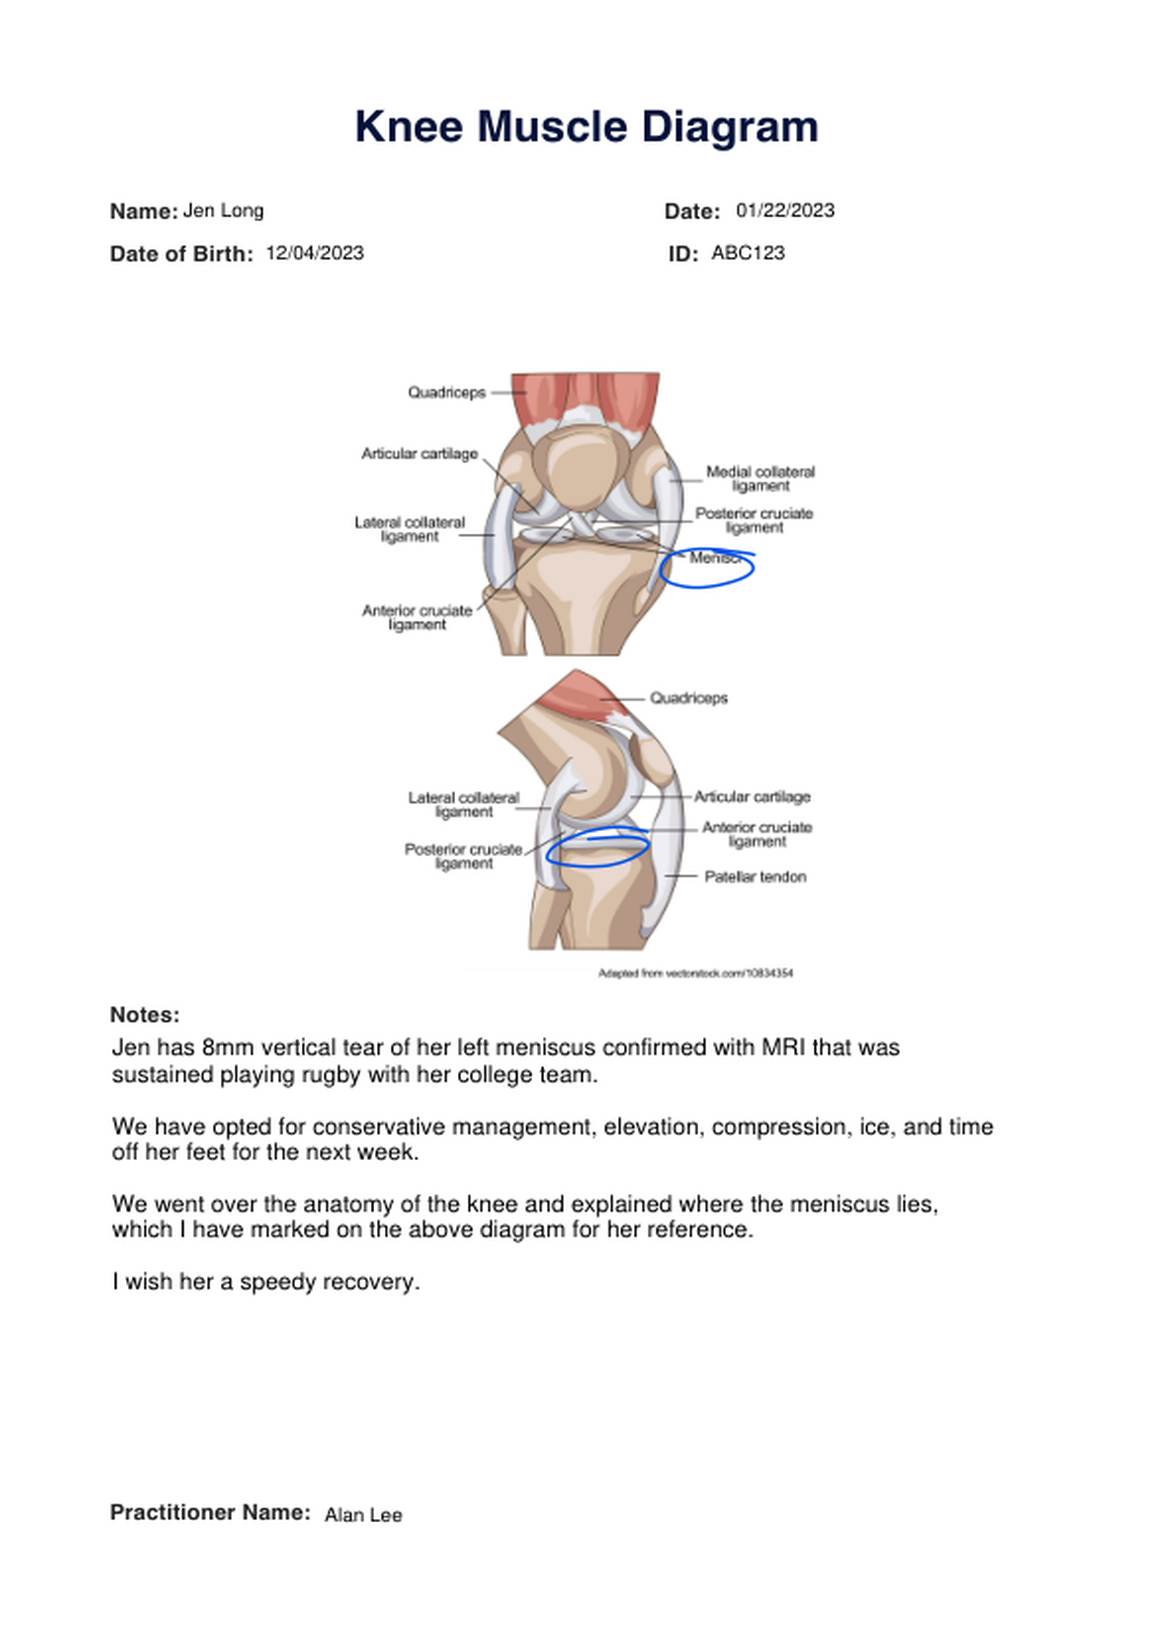 Knee Muscle Diagram PDF Example